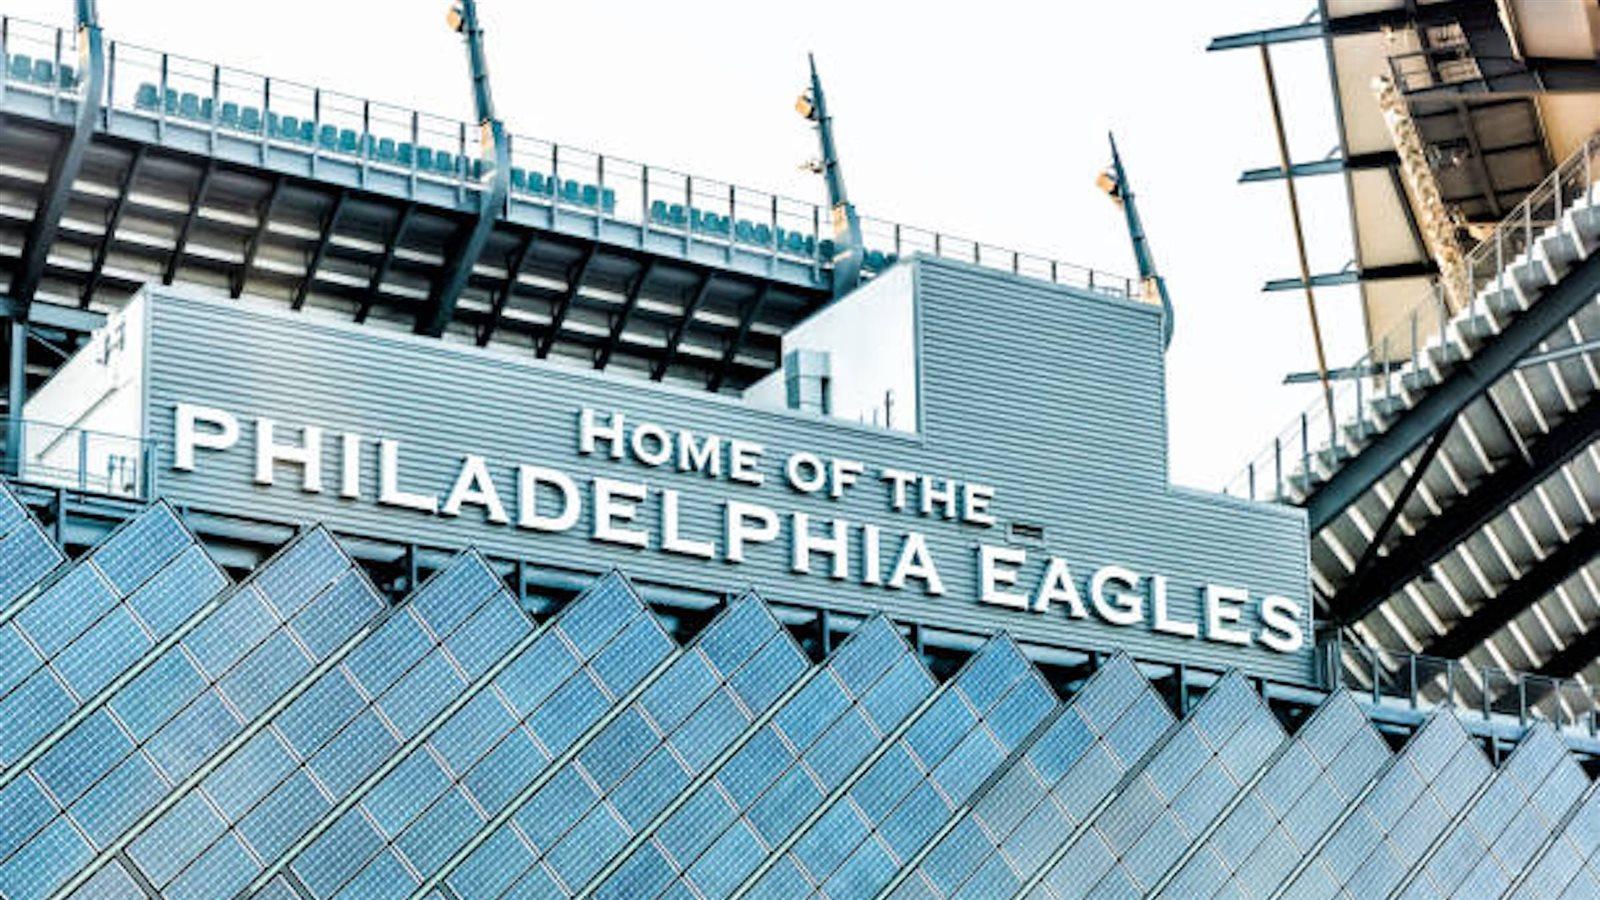 philadelphia eagles home stadium